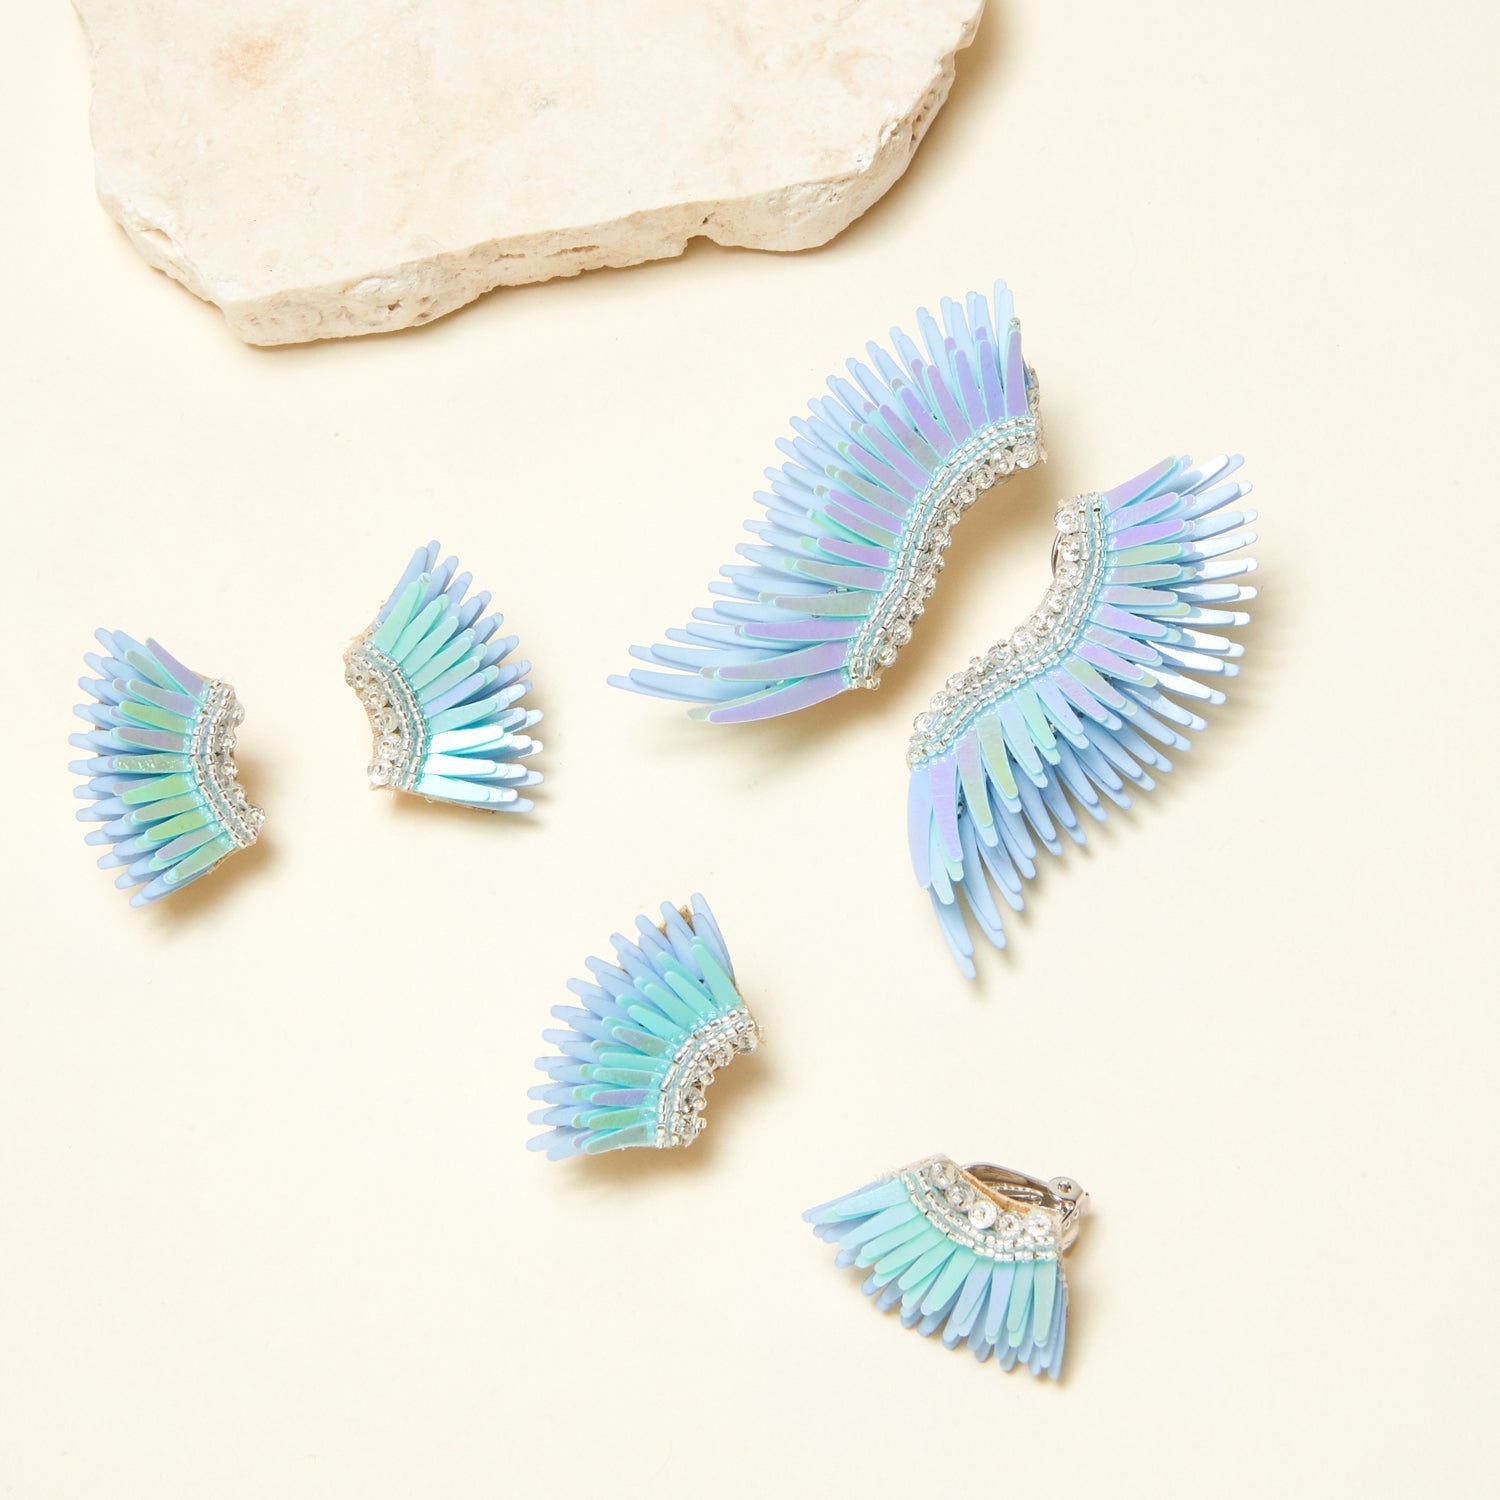 Micro Madeline Clip On Earrings Metallic Blue by Mignonne Gavigan